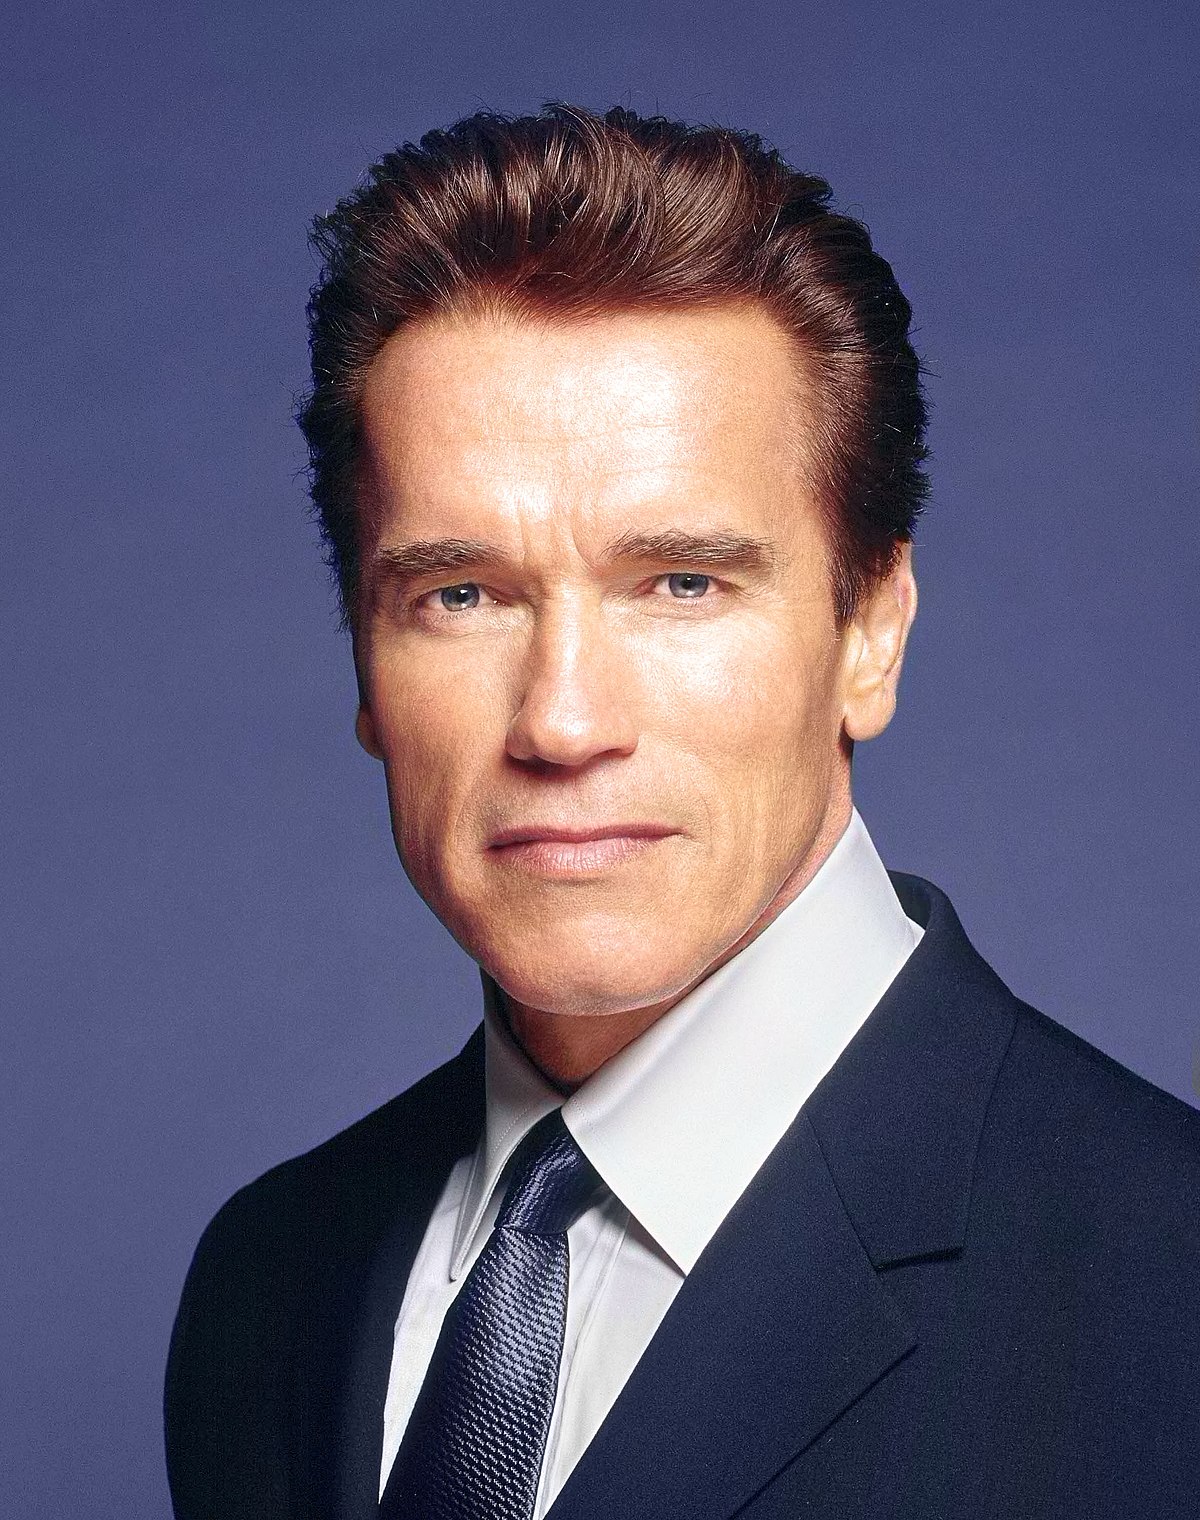 Arnold Schwarzenegger Bio, Age, Career, Net Worth, Height, Wife